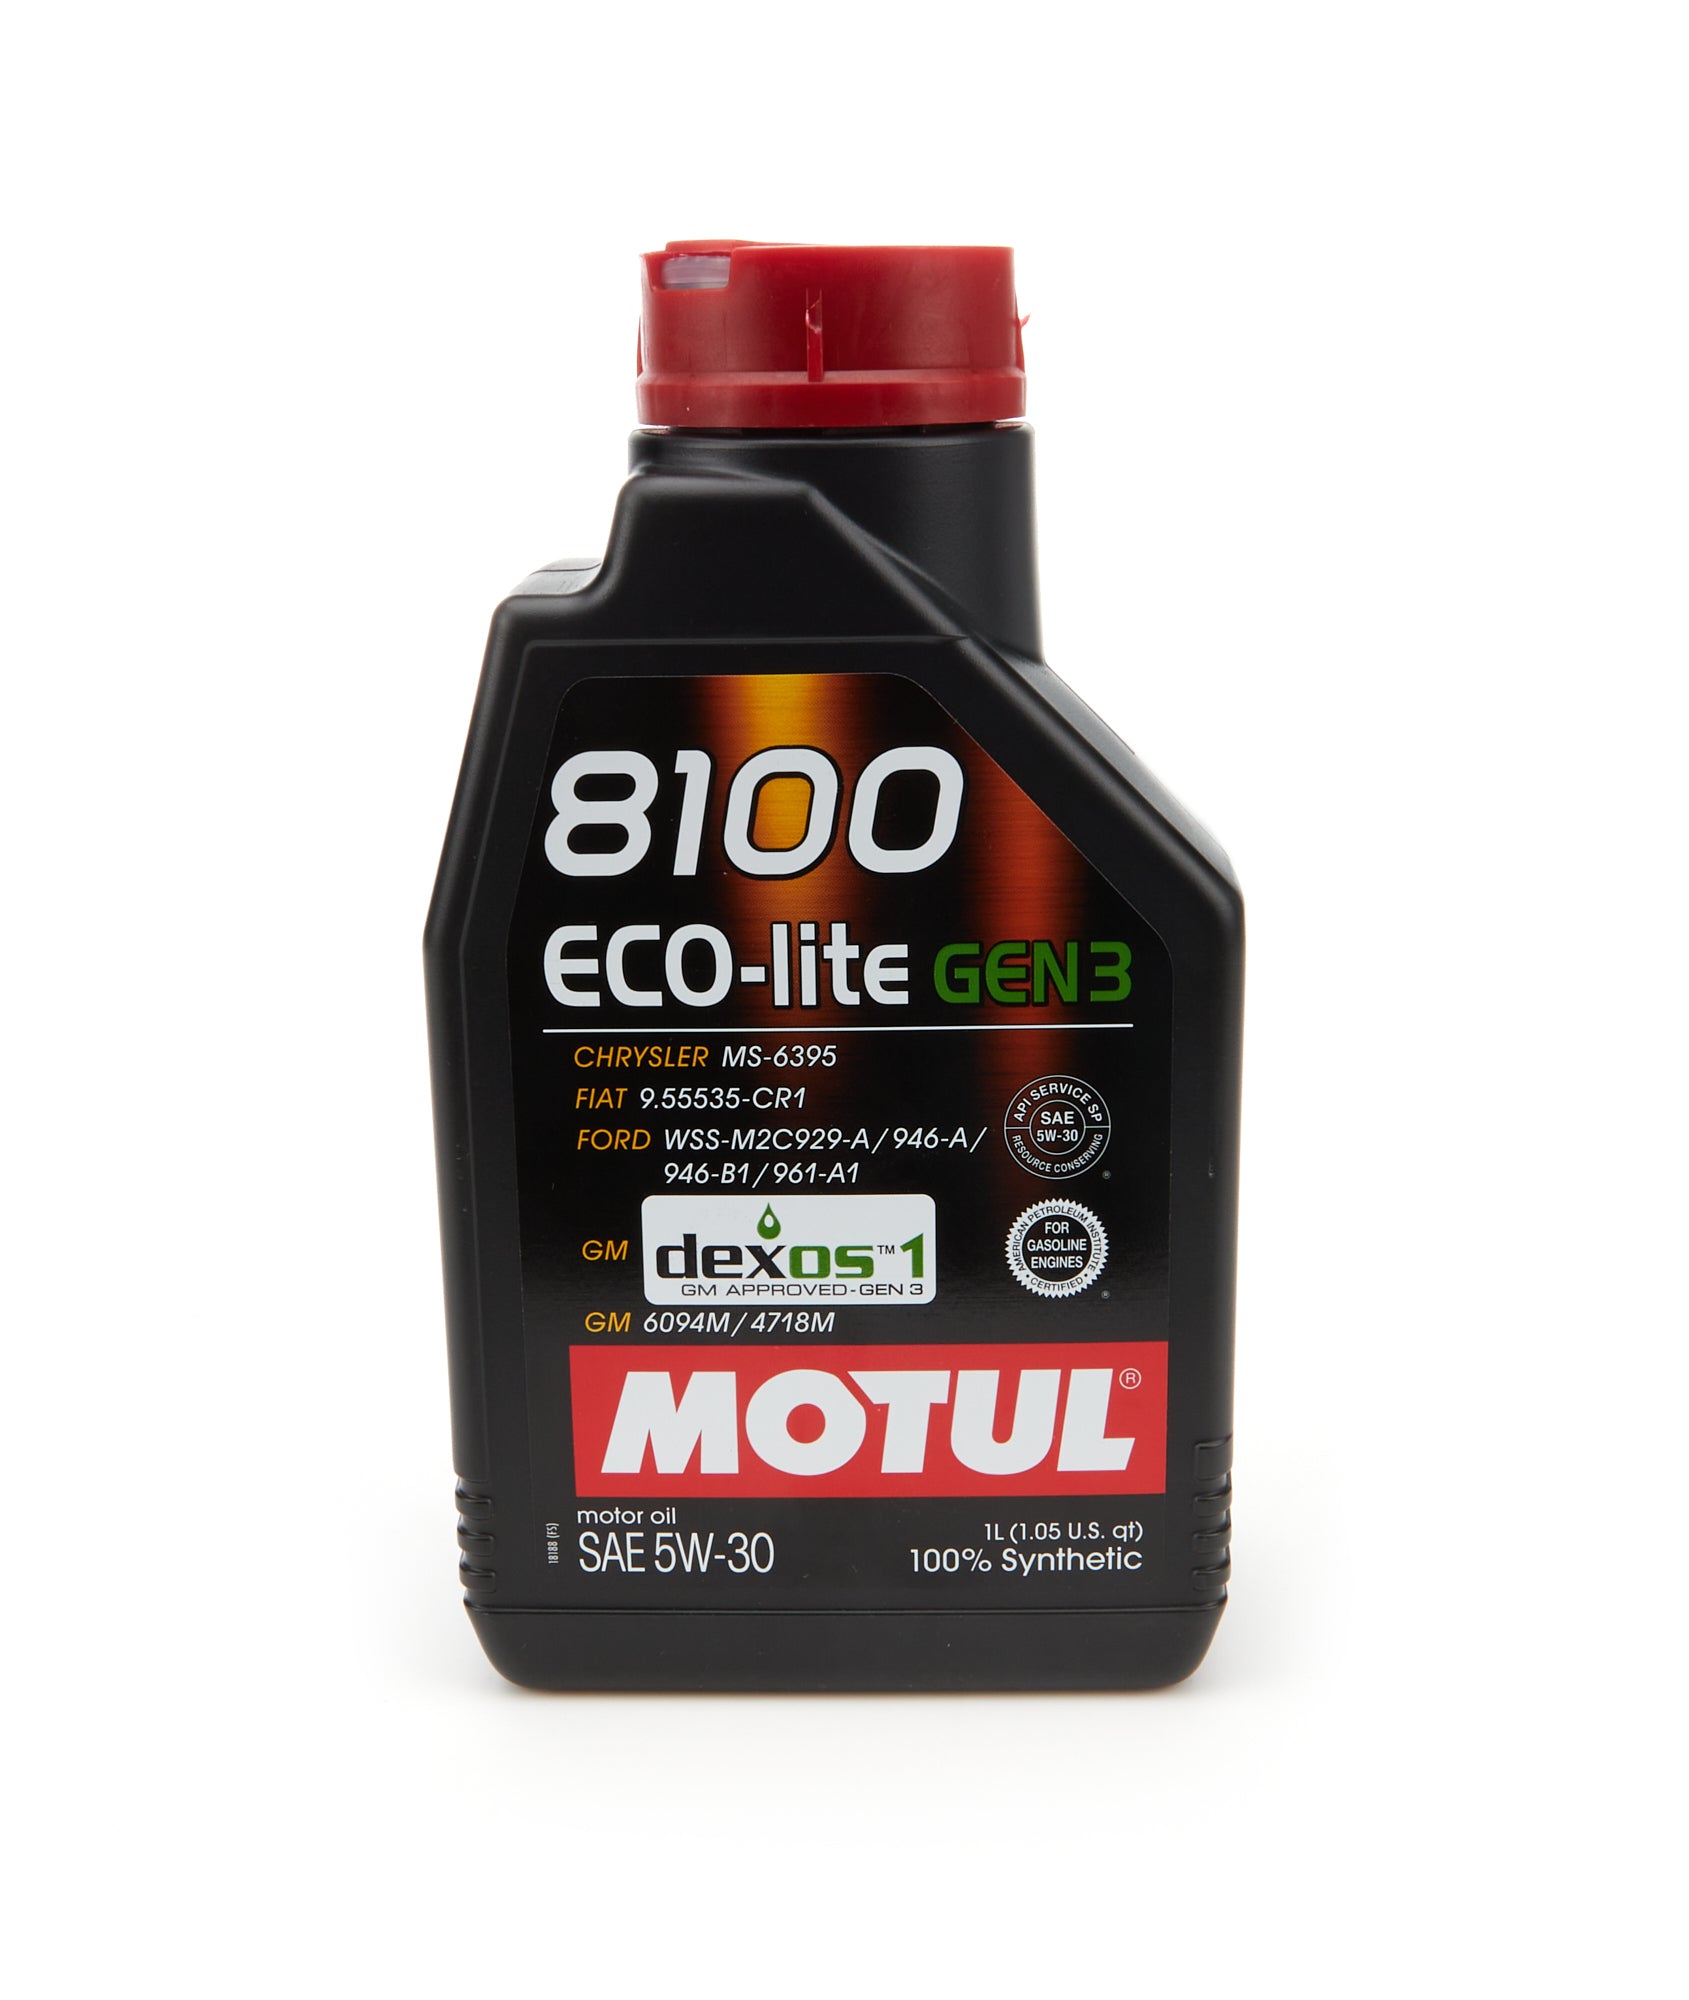 Motul 8100 Eco-Lite Gen3 5w30 1 Liter Oils, Fluids and Additives Motor Oil main image